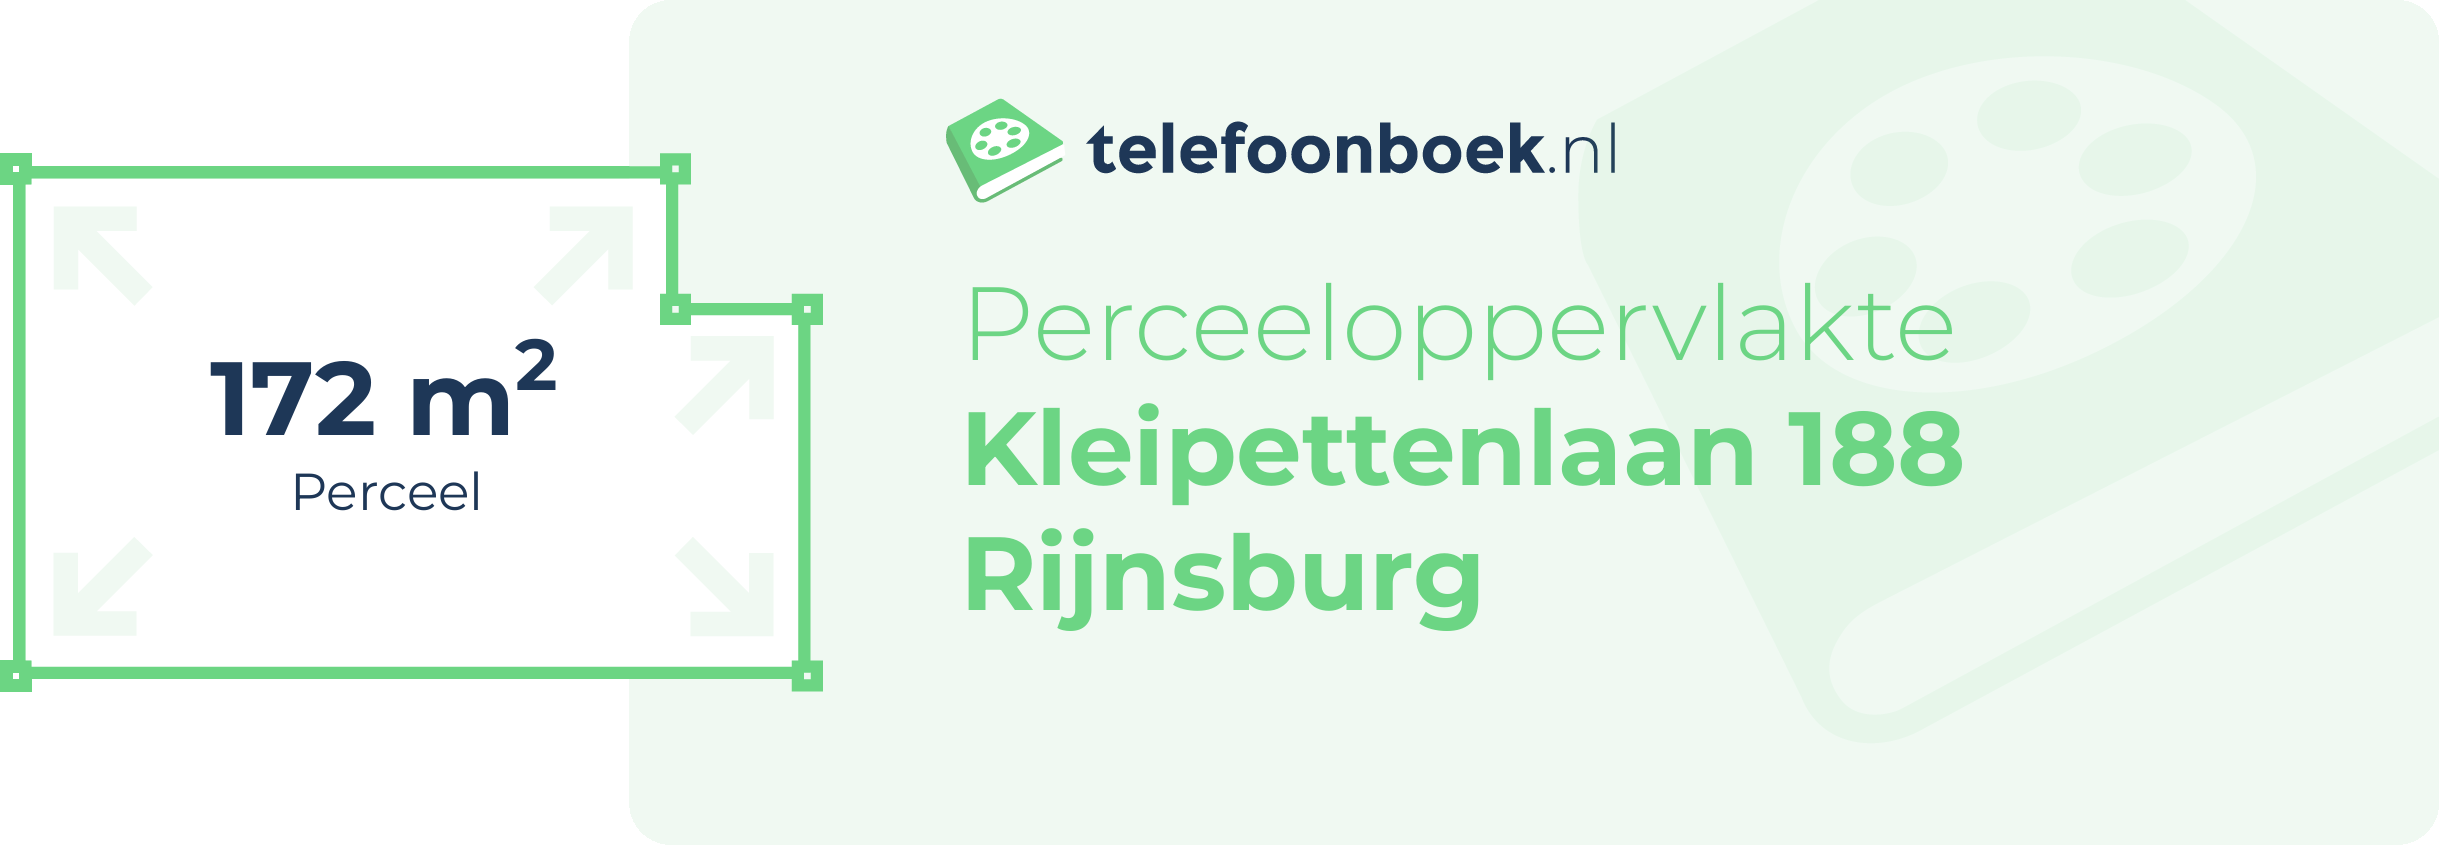 Perceeloppervlakte Kleipettenlaan 188 Rijnsburg